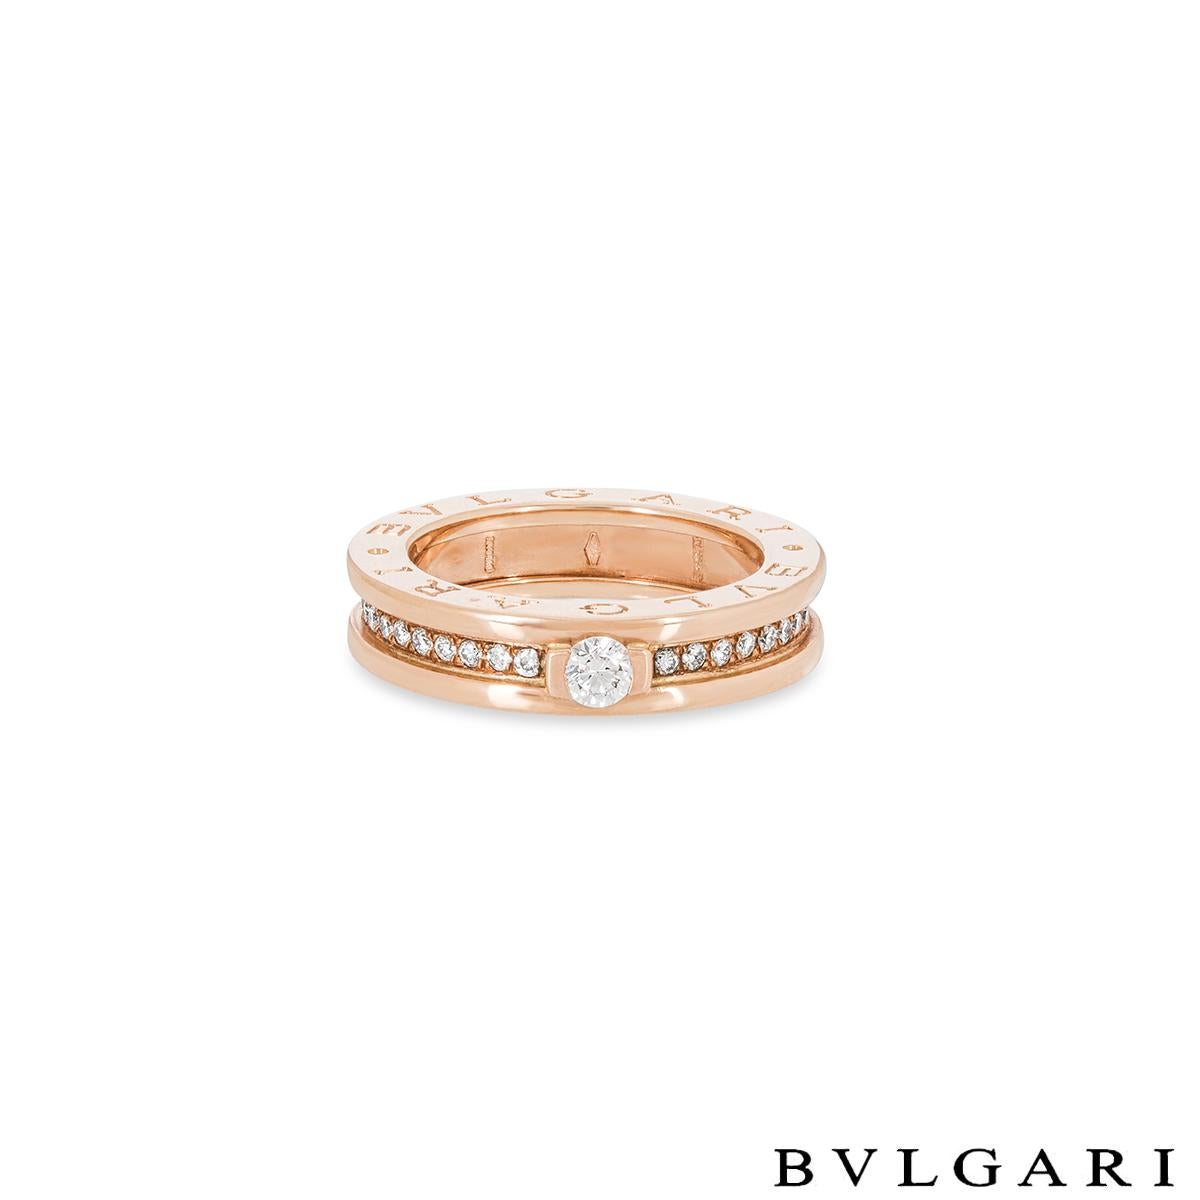 bvlgari rose gold ring with diamonds